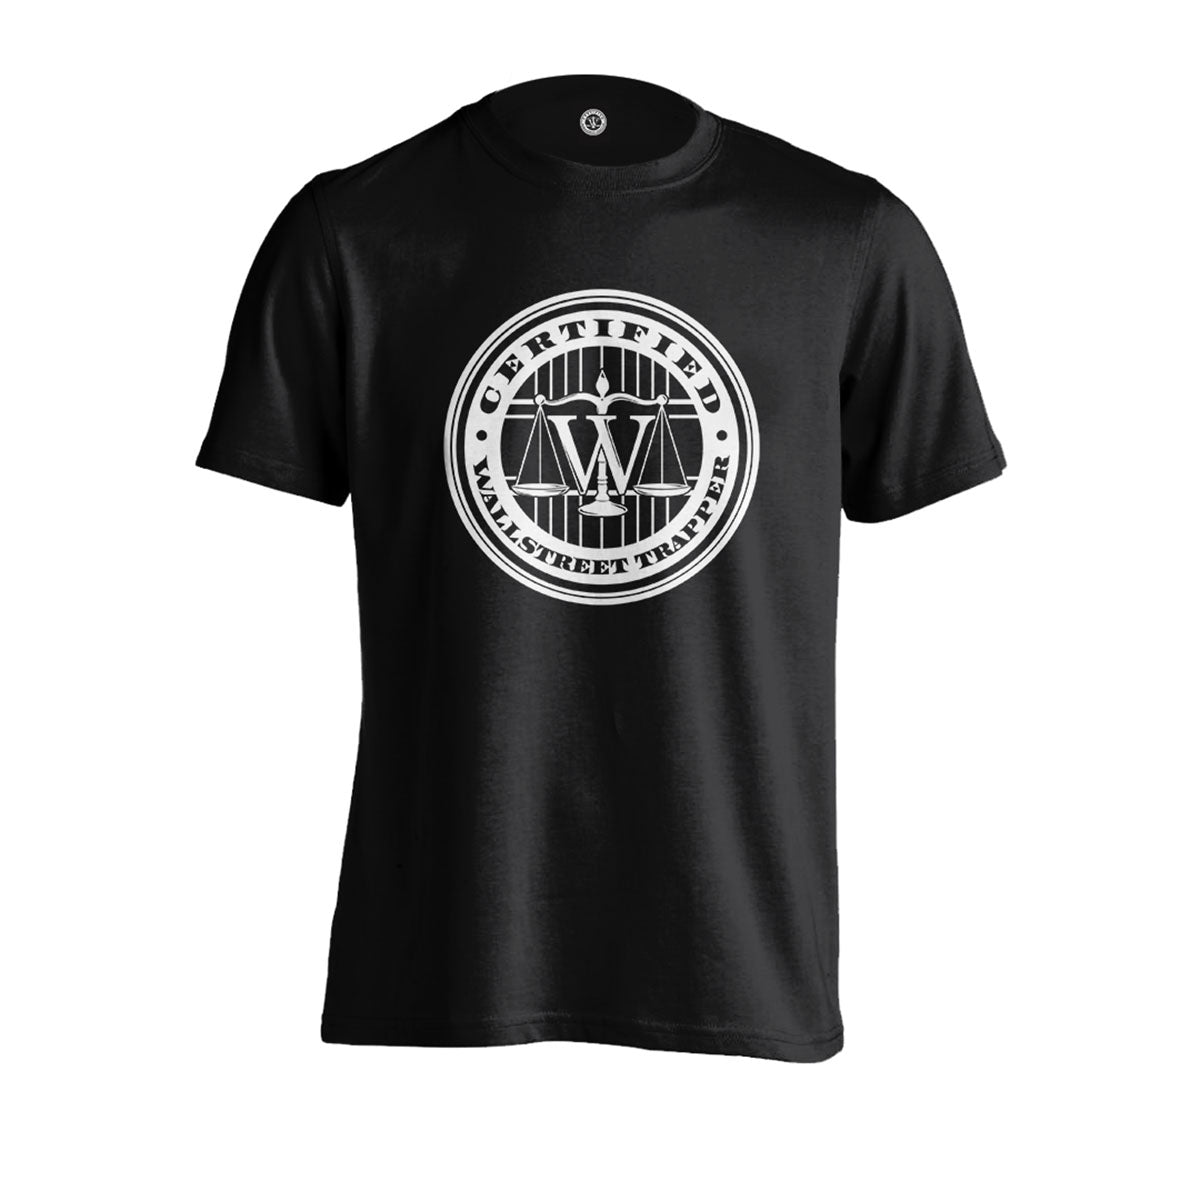 Certified Wall Street Trapper T-Shirt